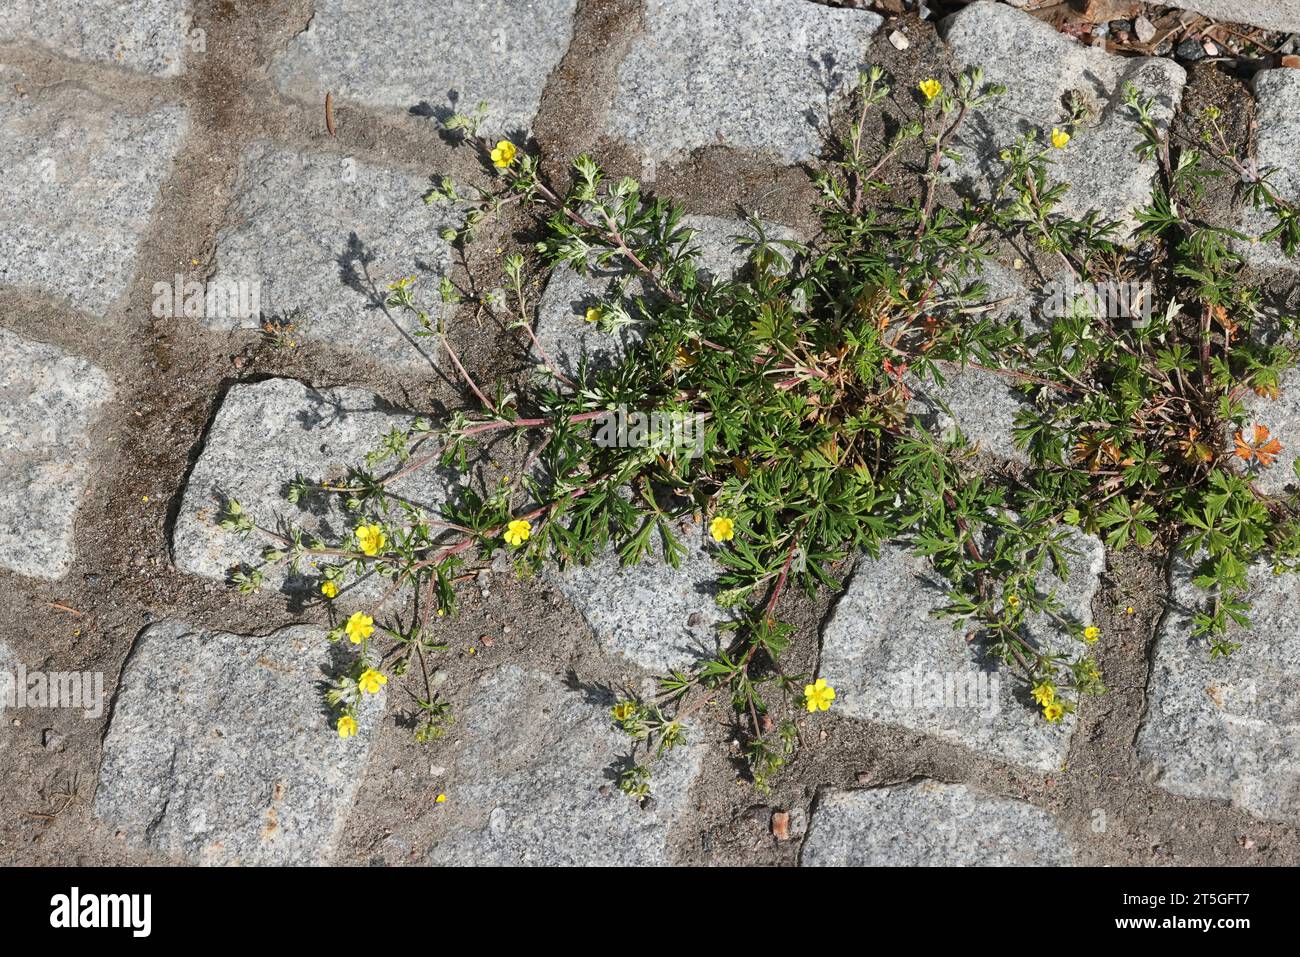 Silver Cinquefoil, Potentilla argentea, also called Hoary cinquefoil, wild flower from Finland Stock Photo